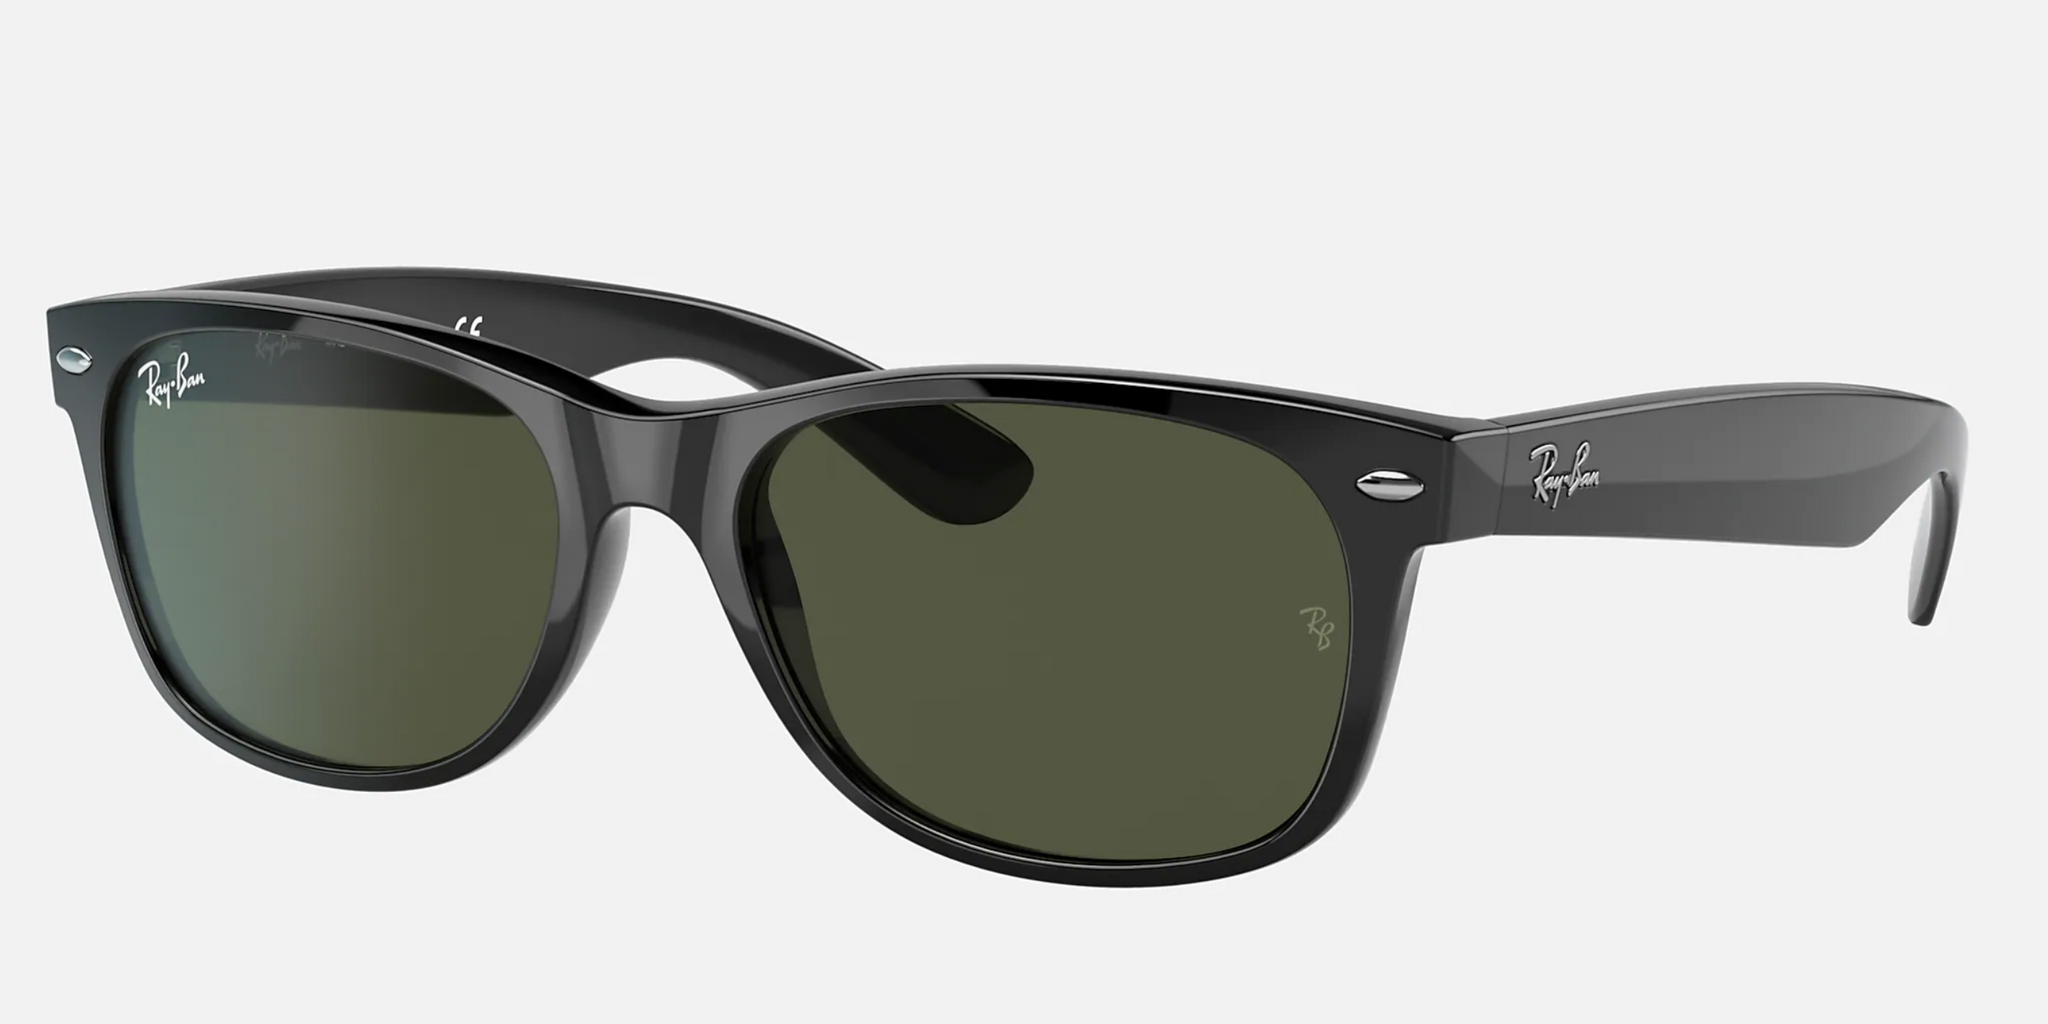 Ray-Ban New Wayfarer Black Classic Sunglasses RB2132 - Sunglasses